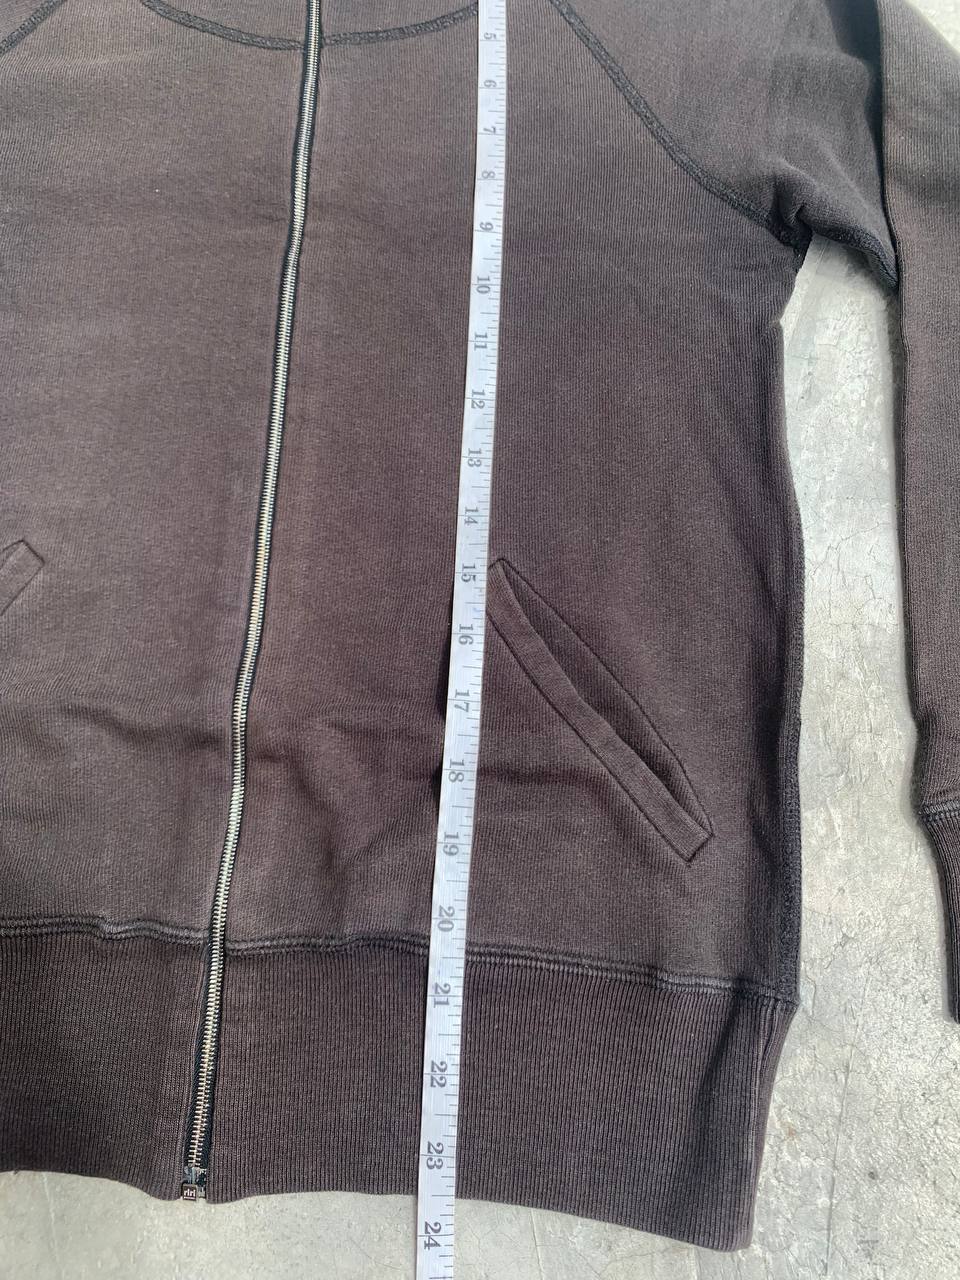 APC ETE 2003 Faded Black Zip Up Sweater - 7